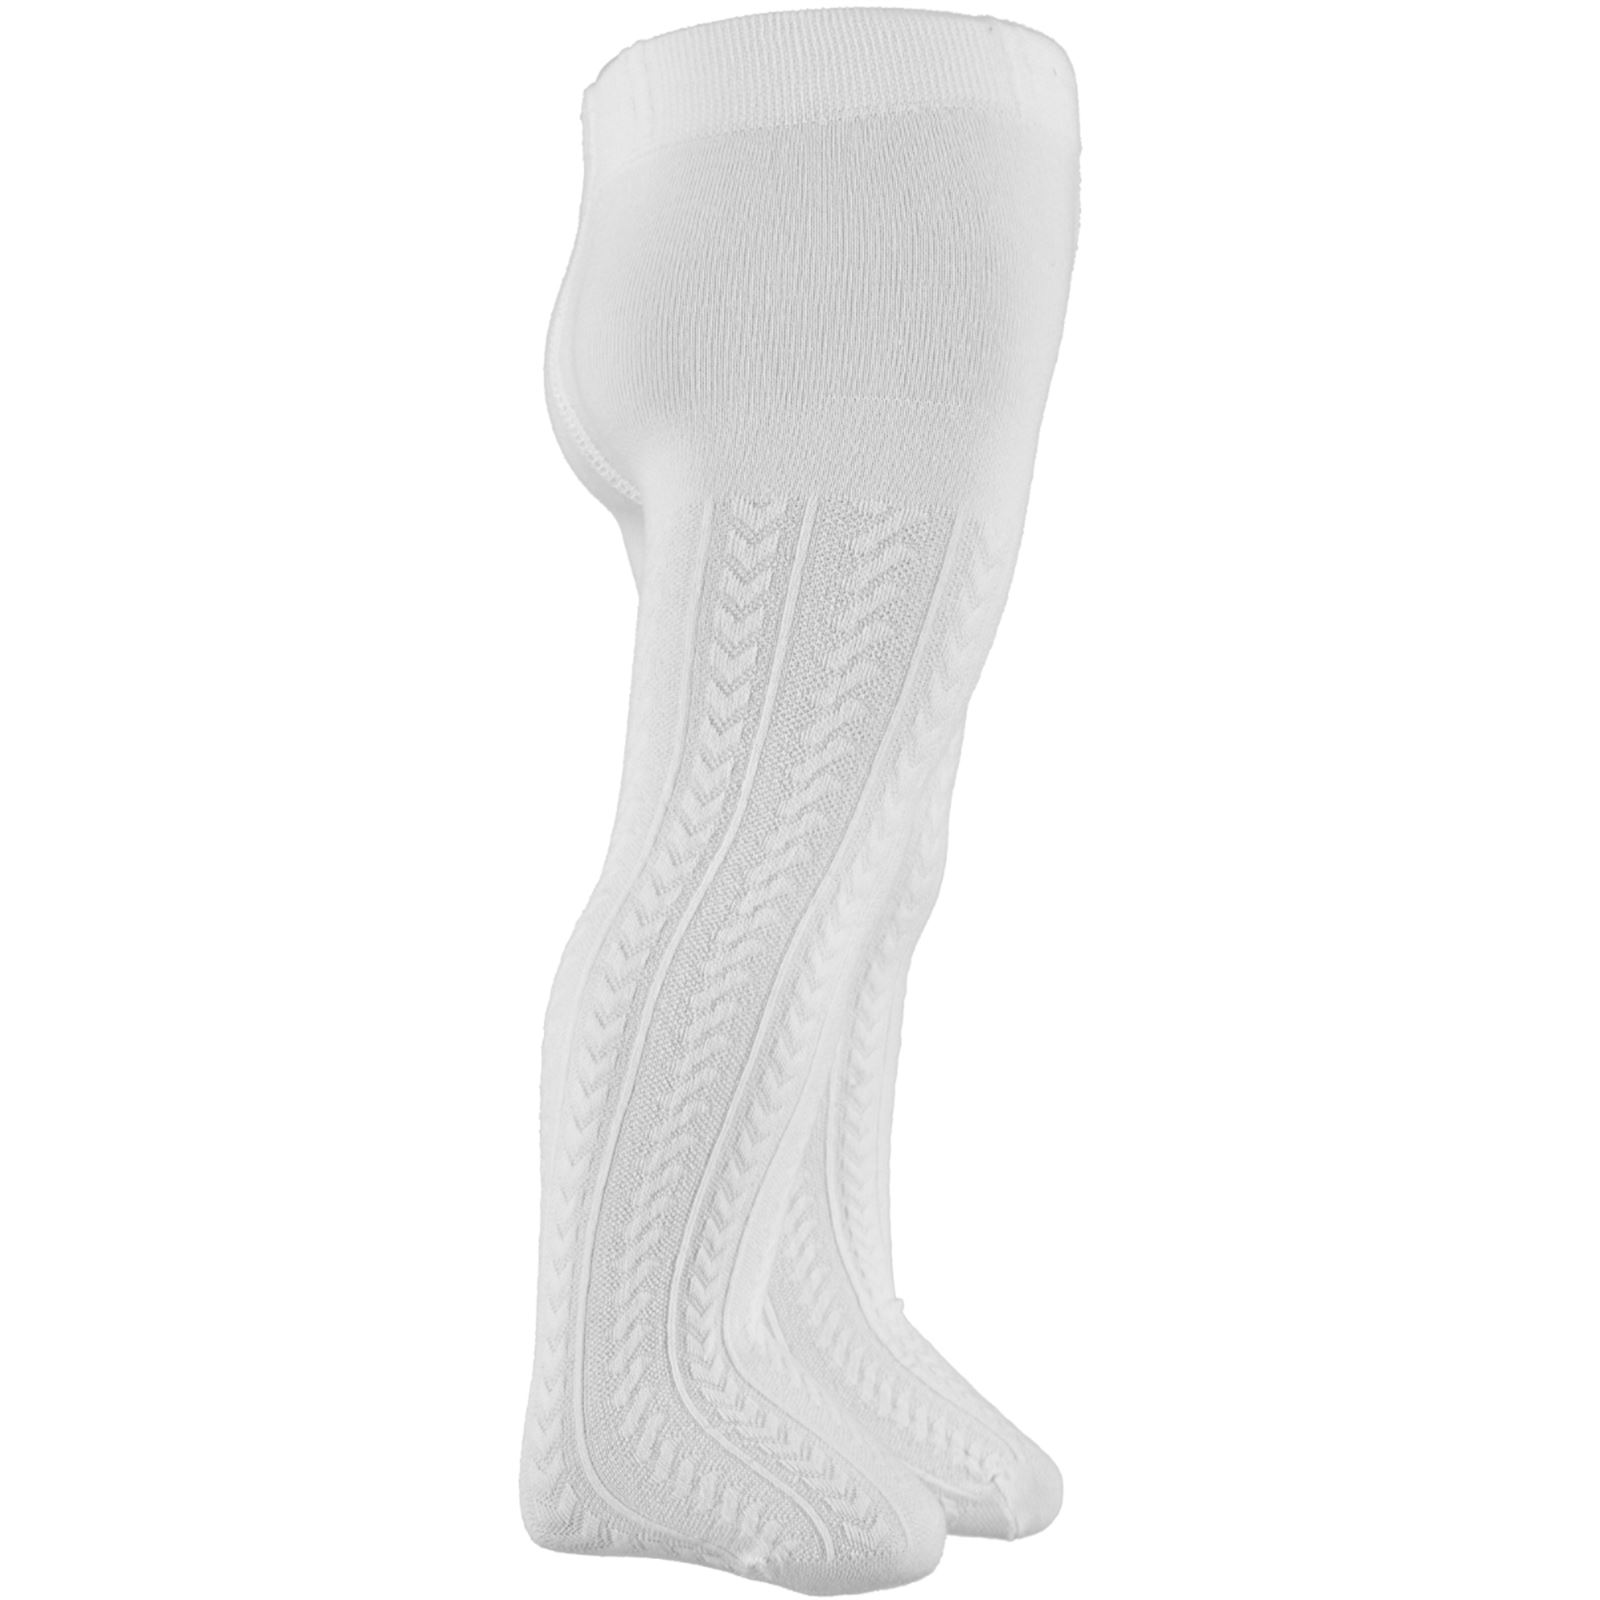 Bella Calze Triko Külotlu Çorap 0-24 Ay Beyaz